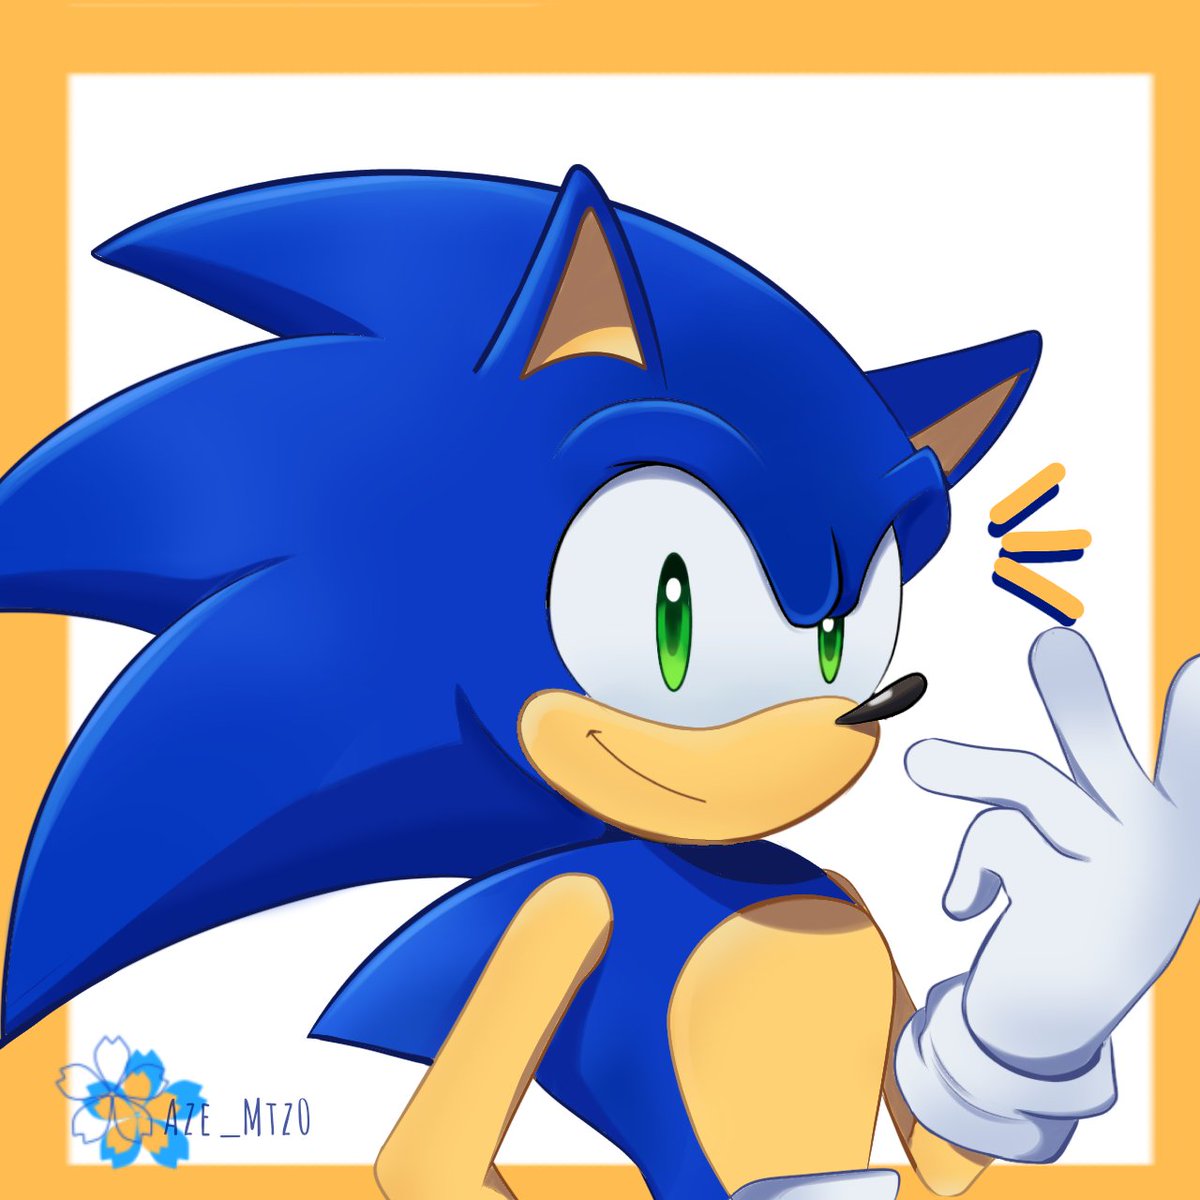 #SonicTheHedgehog #sonic  

🌿Un dibujo rápido